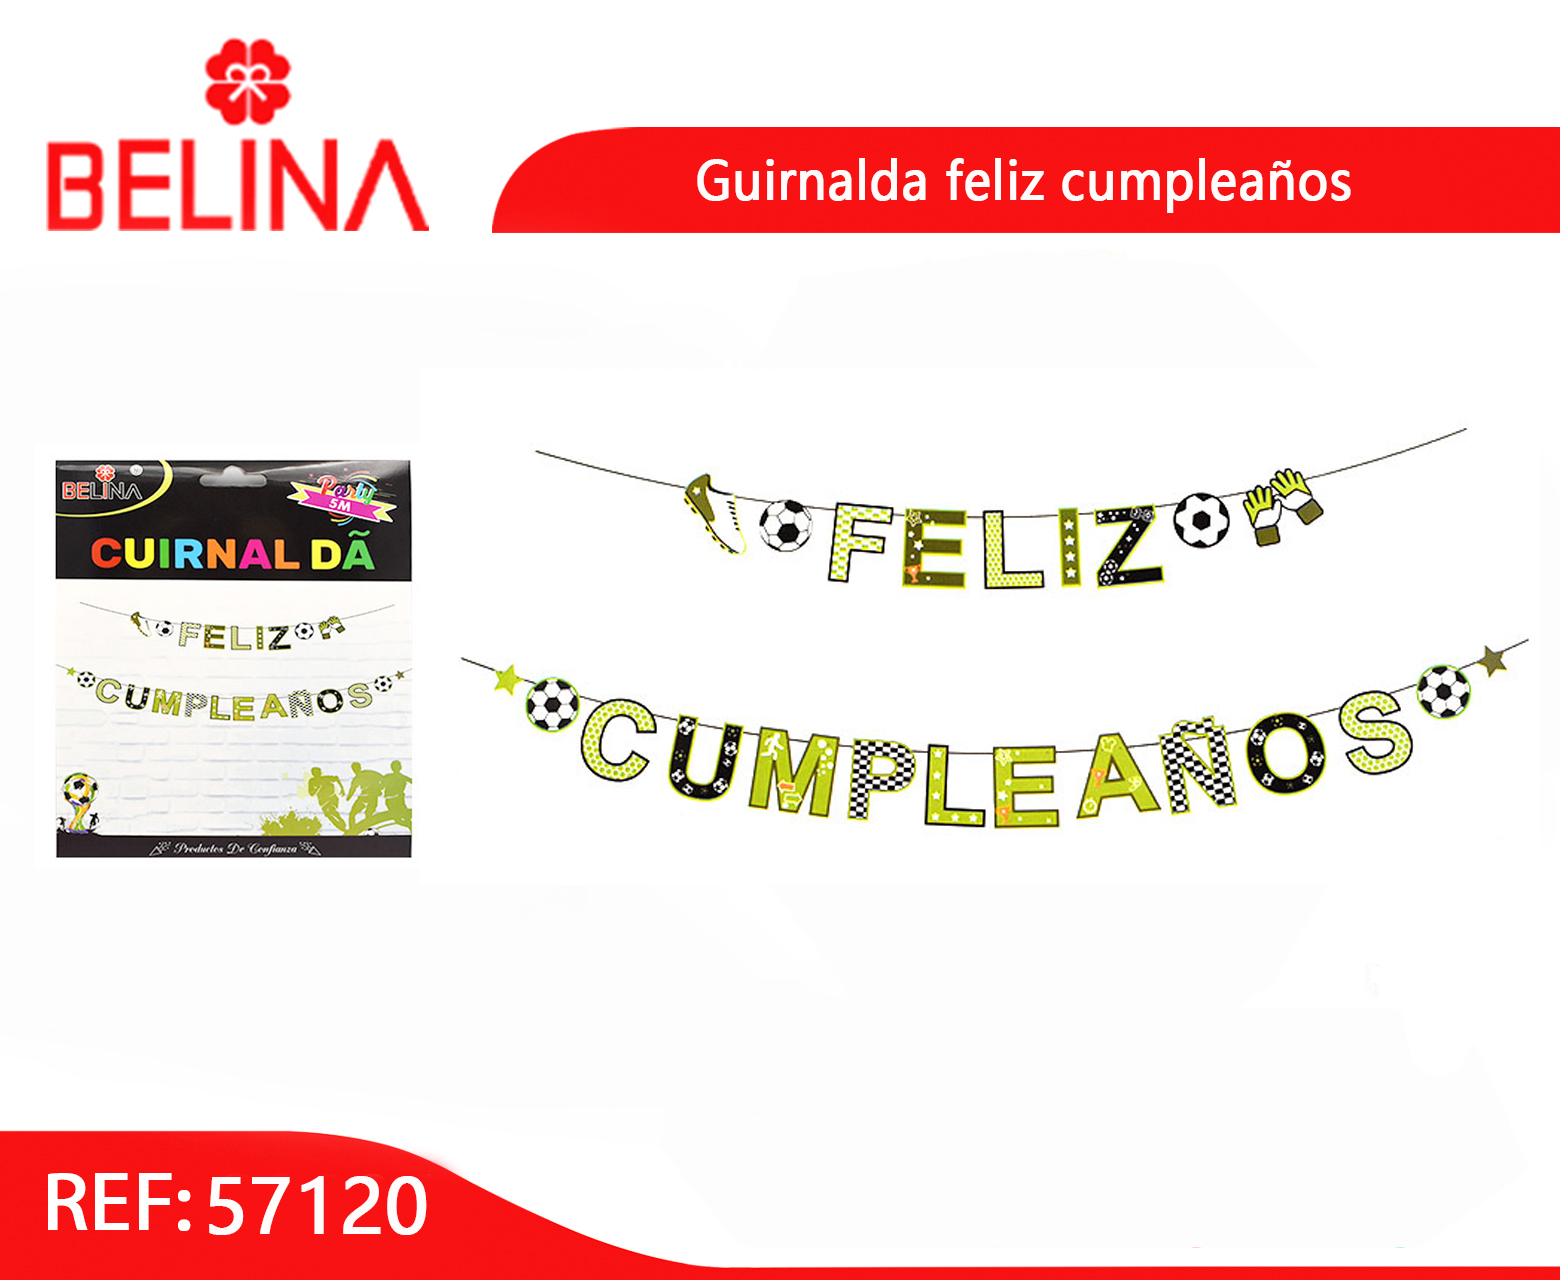 Topper de futbol feliz cumpleaños – Belina Cotillon